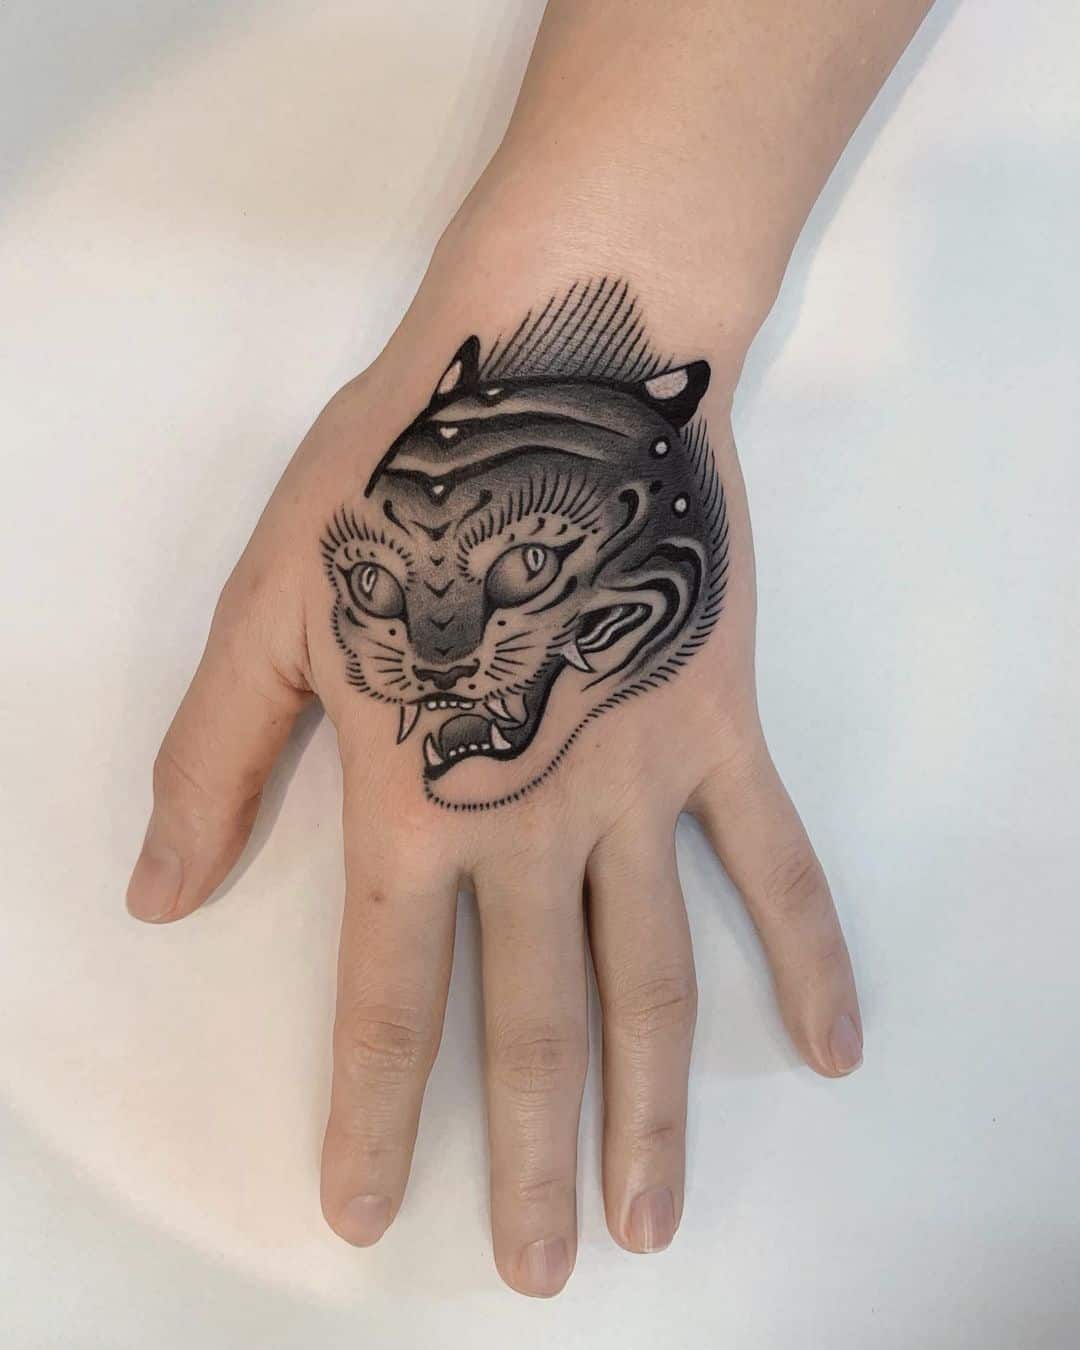 Korean tiger tattoo on hand by monique.pak